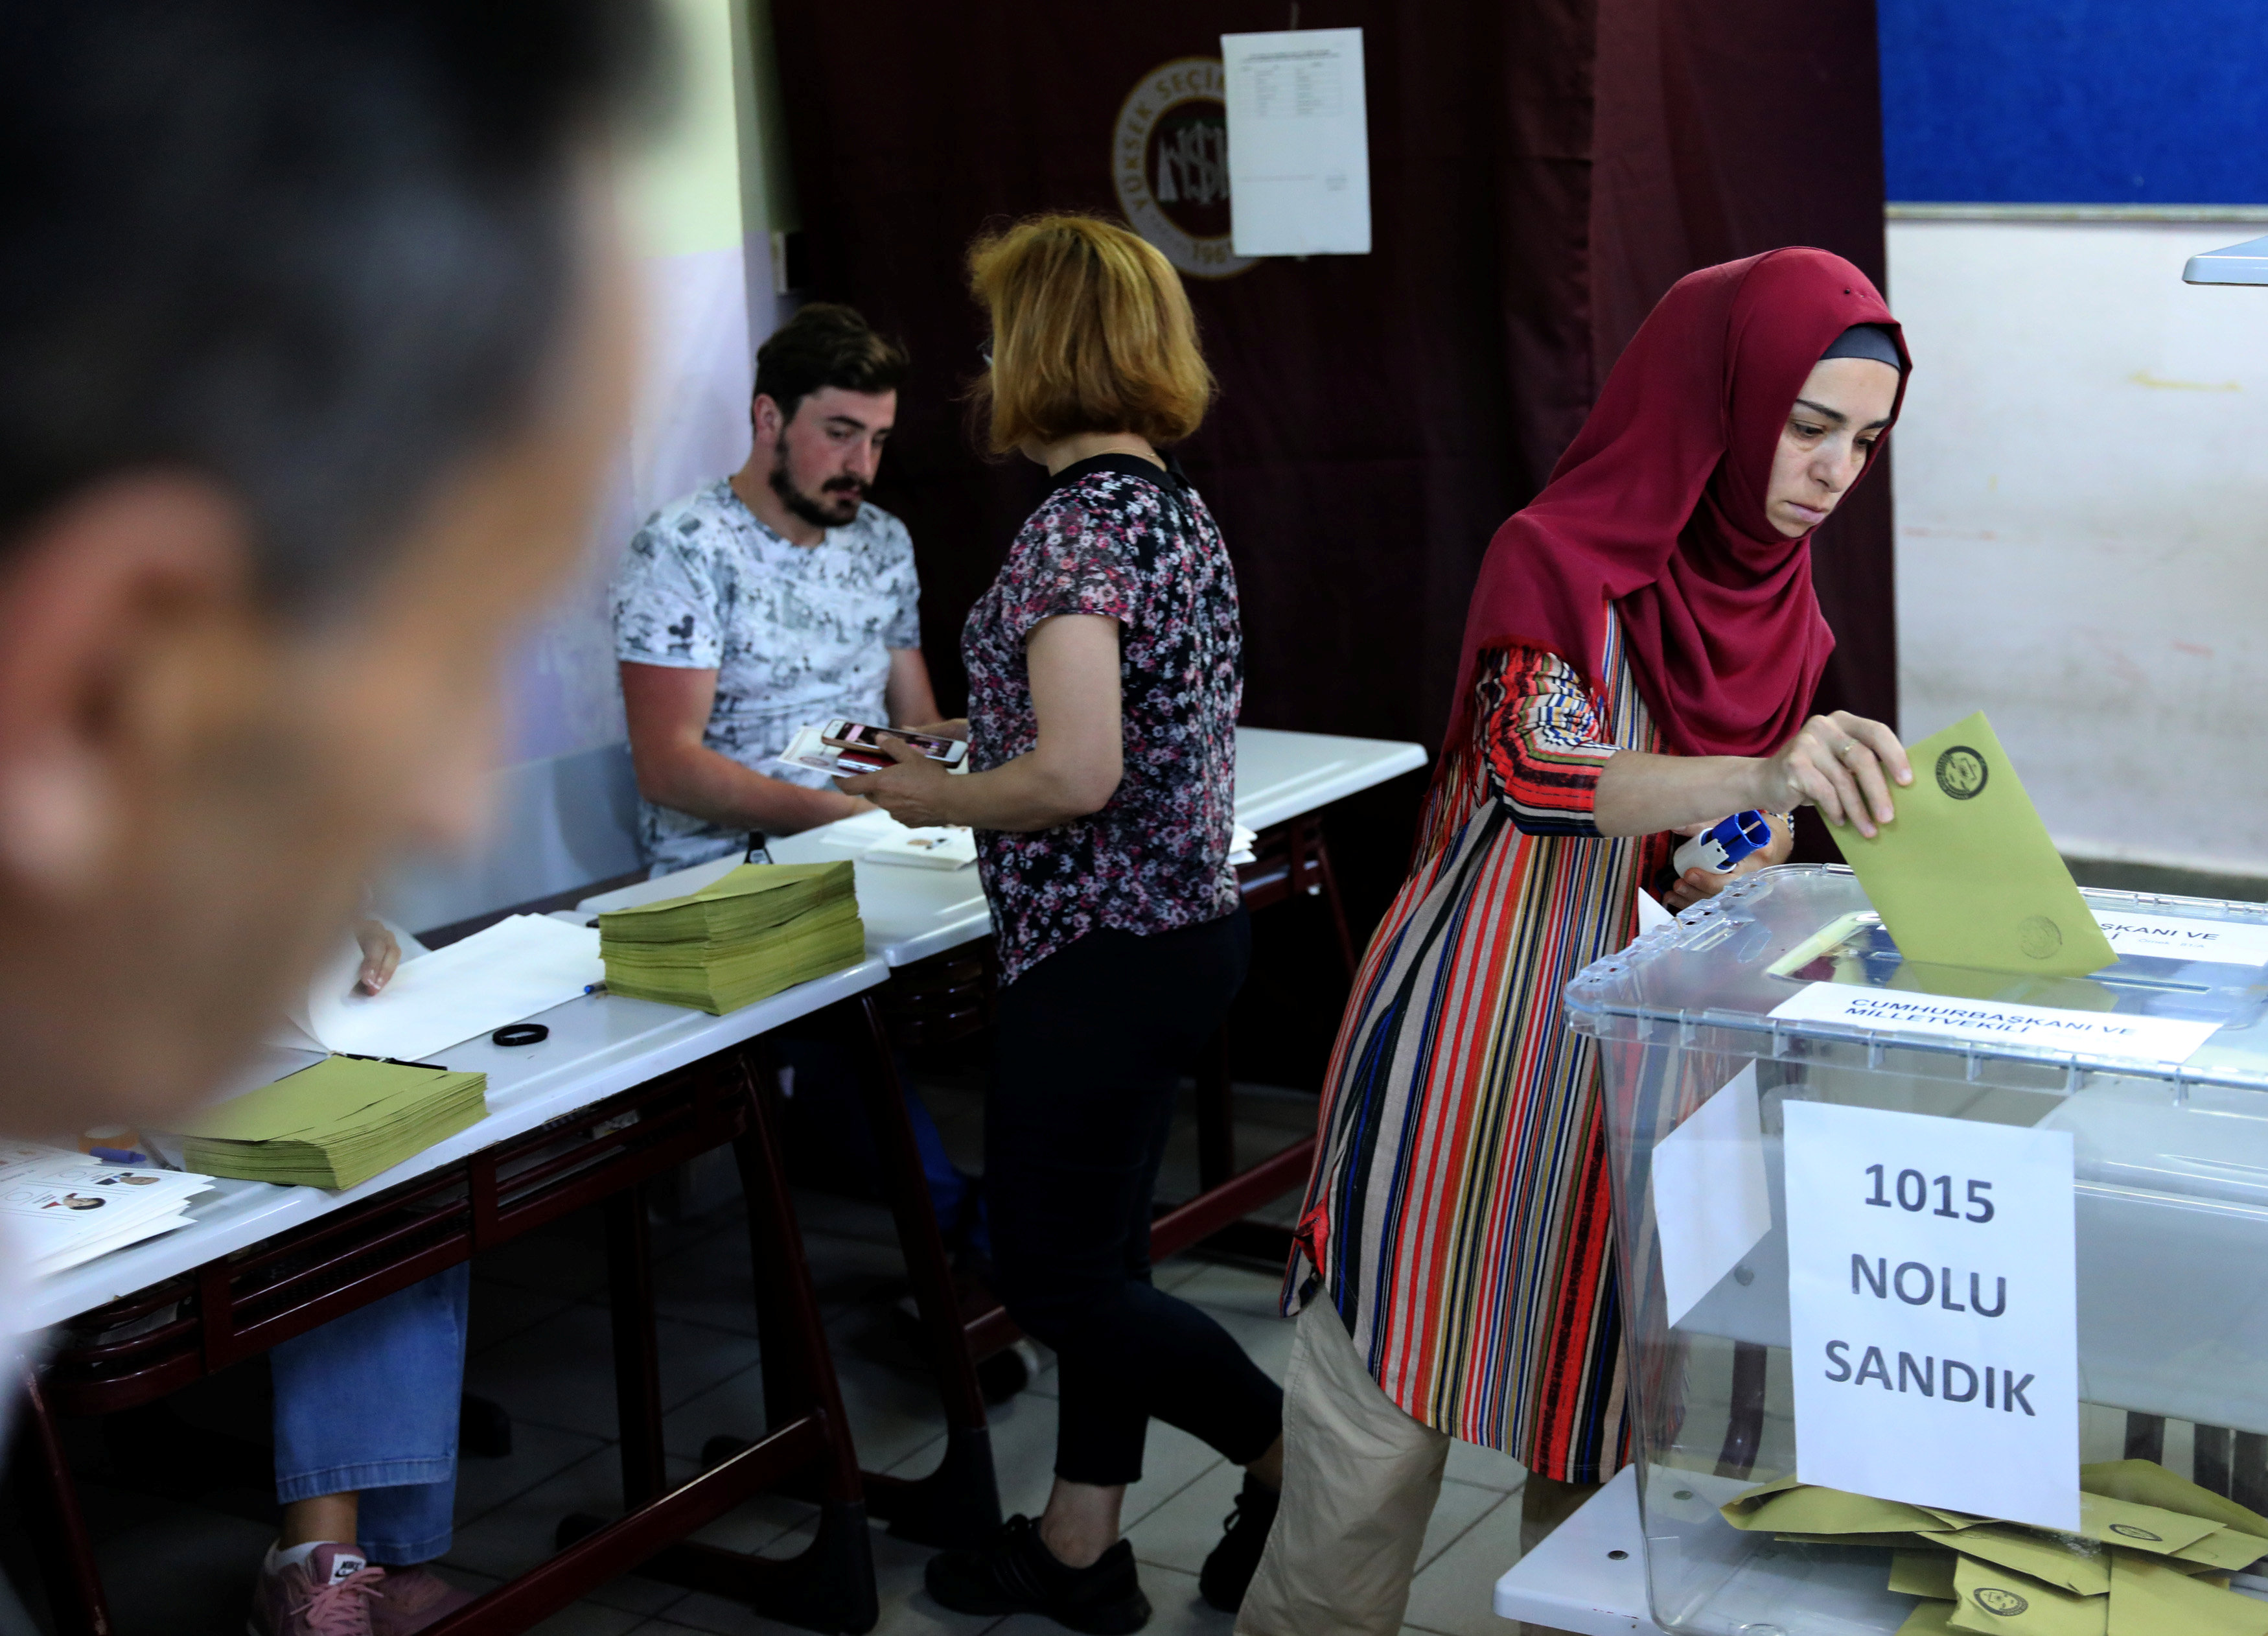 Erdogan faces major test as Turks vote for president, parliament